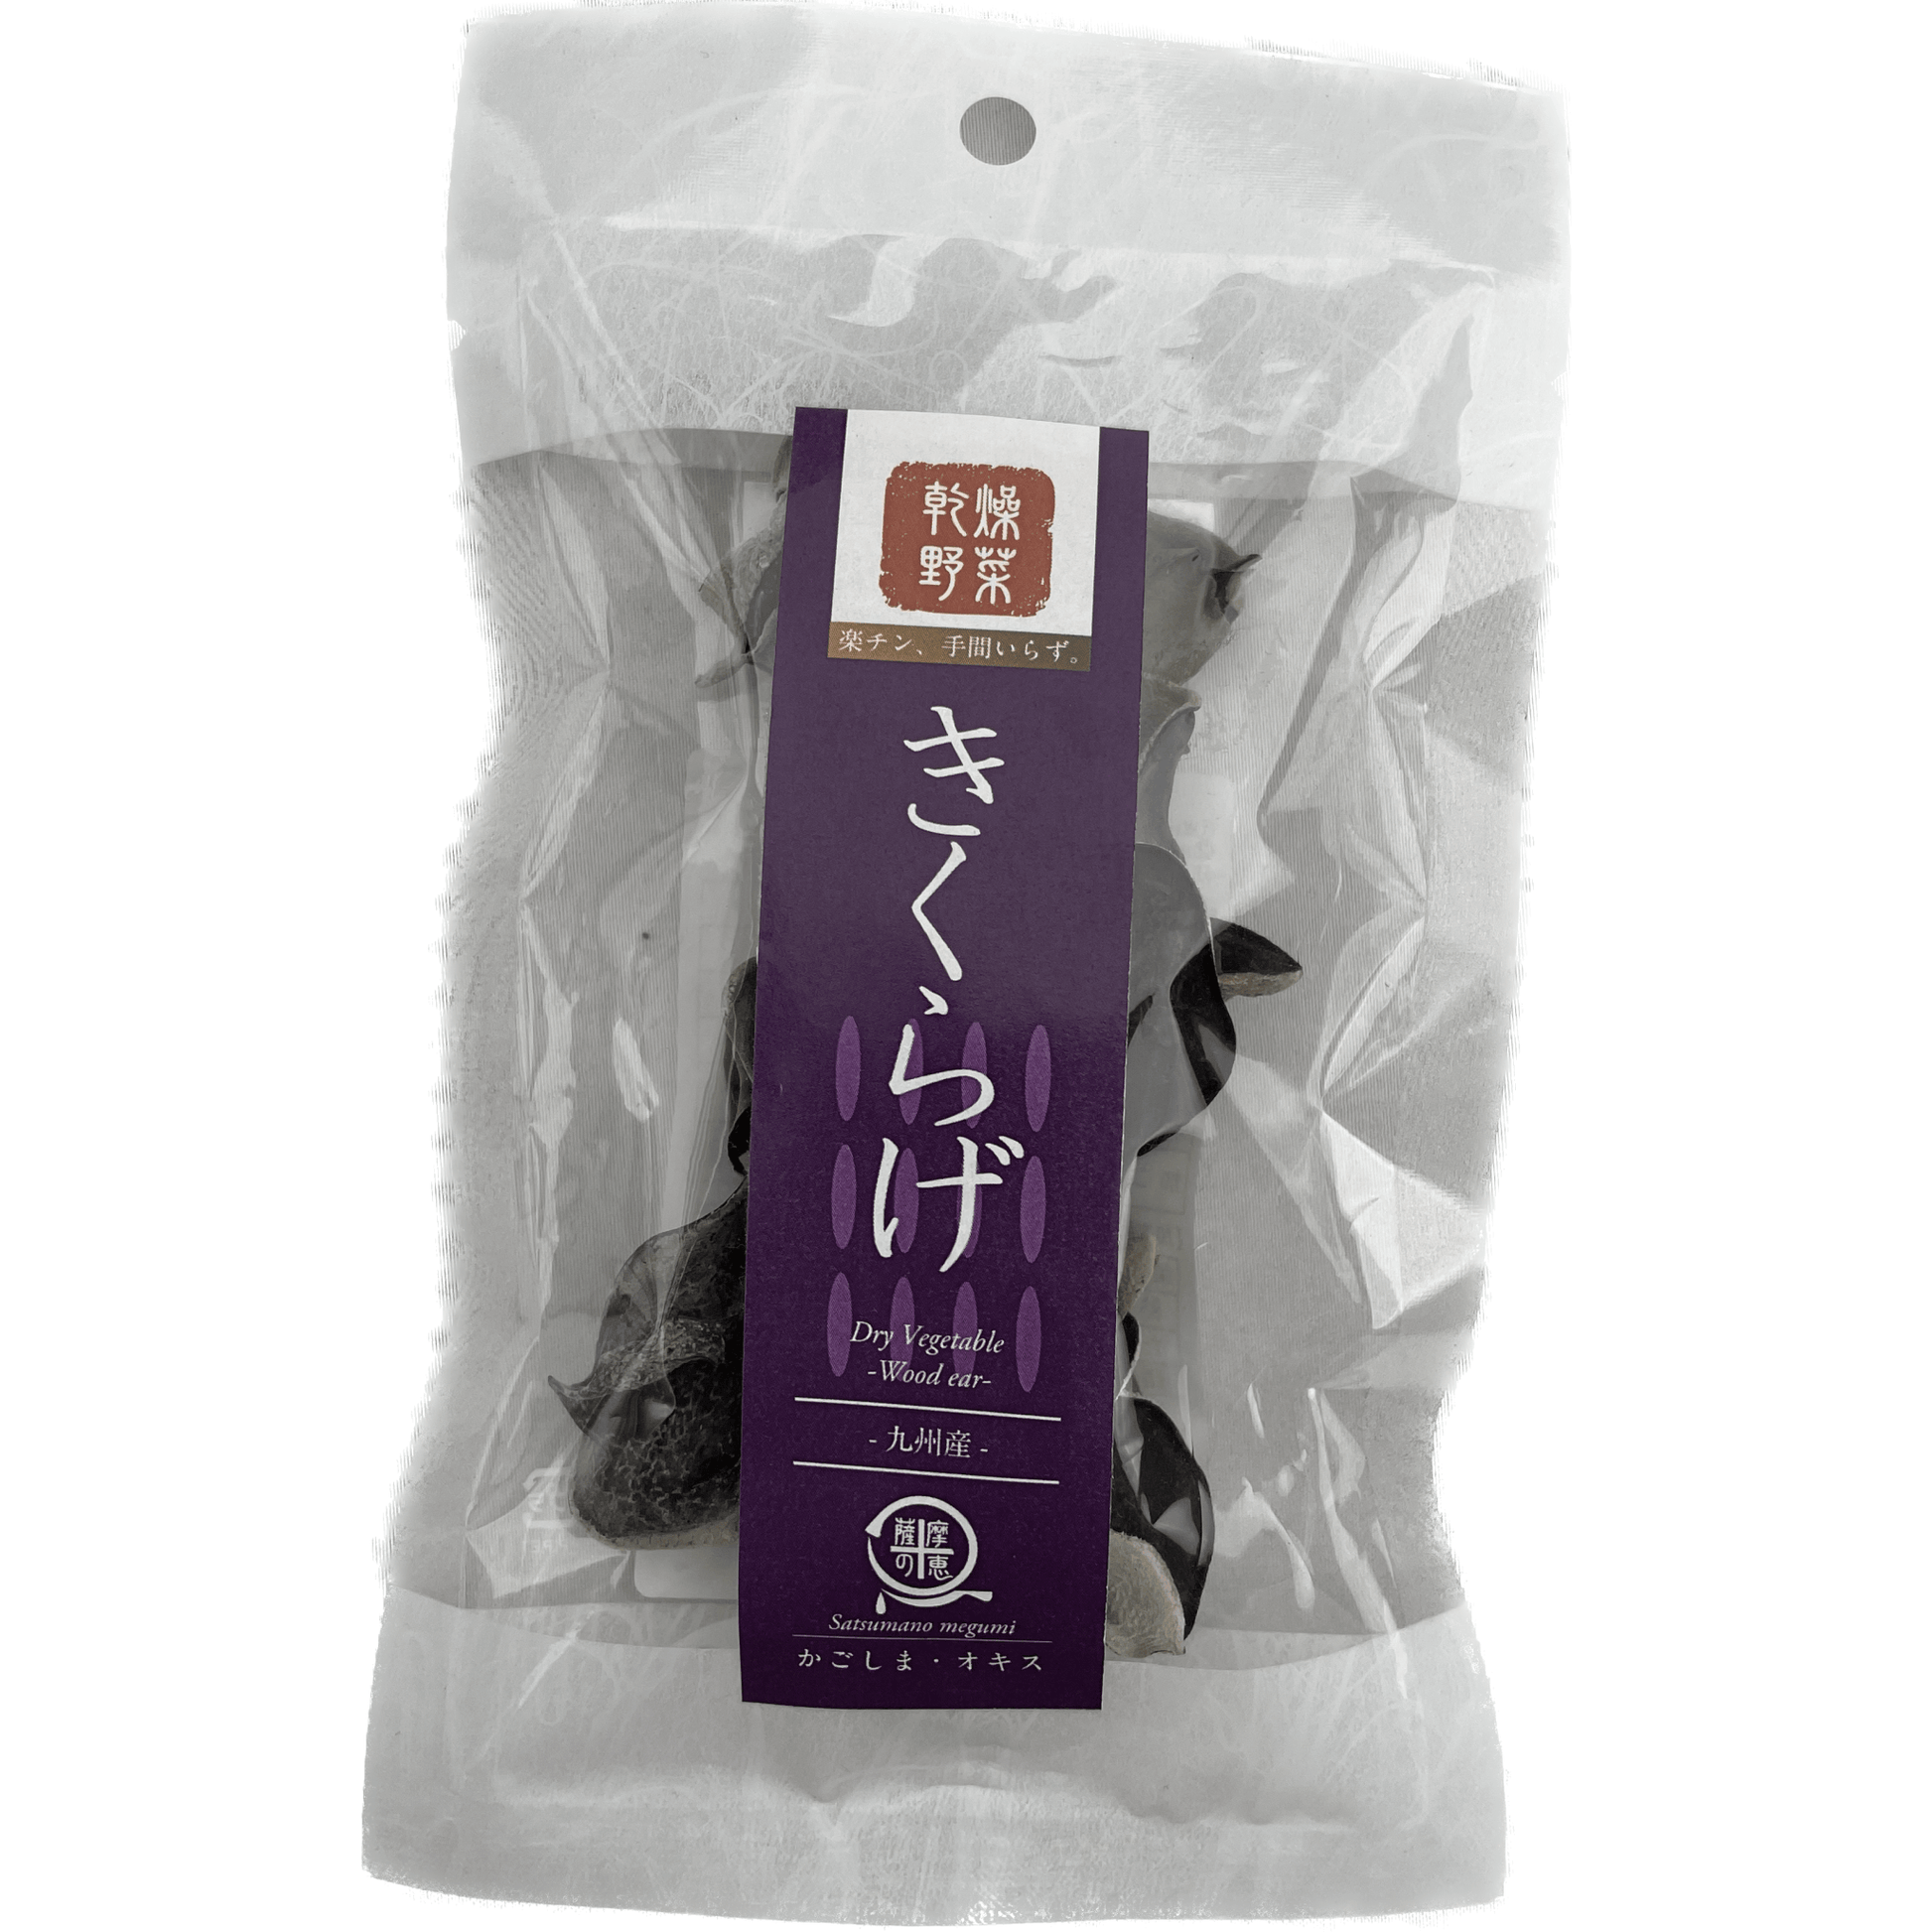 Okisu Dired Kikurage Wood Ear Mushroom 10g / オキス 薩摩の恵 乾燥きくらげ 10g - RiceWineShop